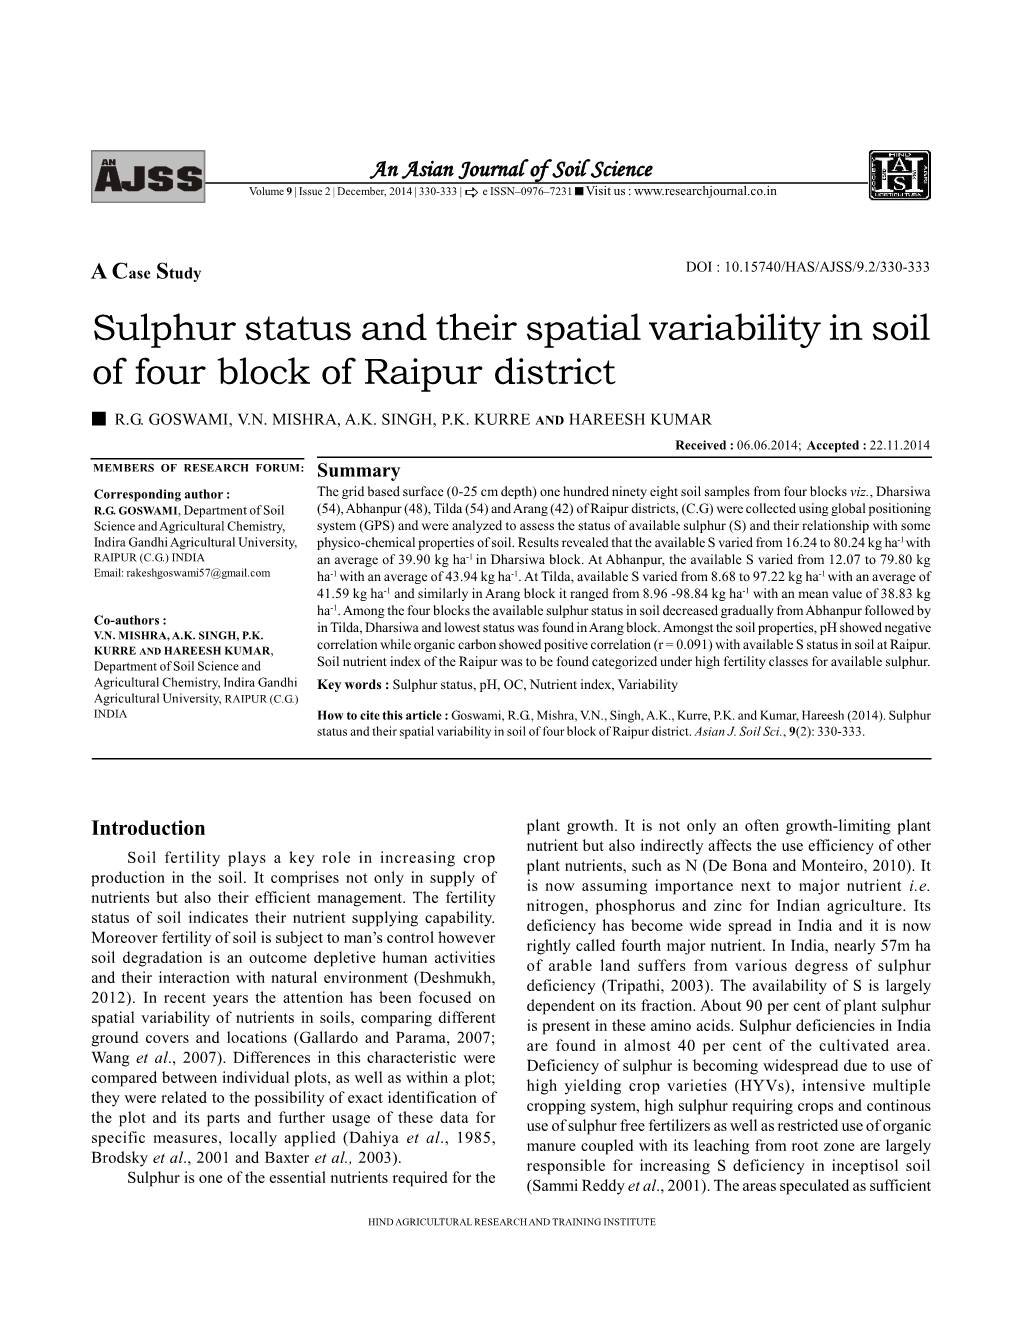 Sulphur Status and Their Spatial Variability in Soil of Four Block of Raipur District